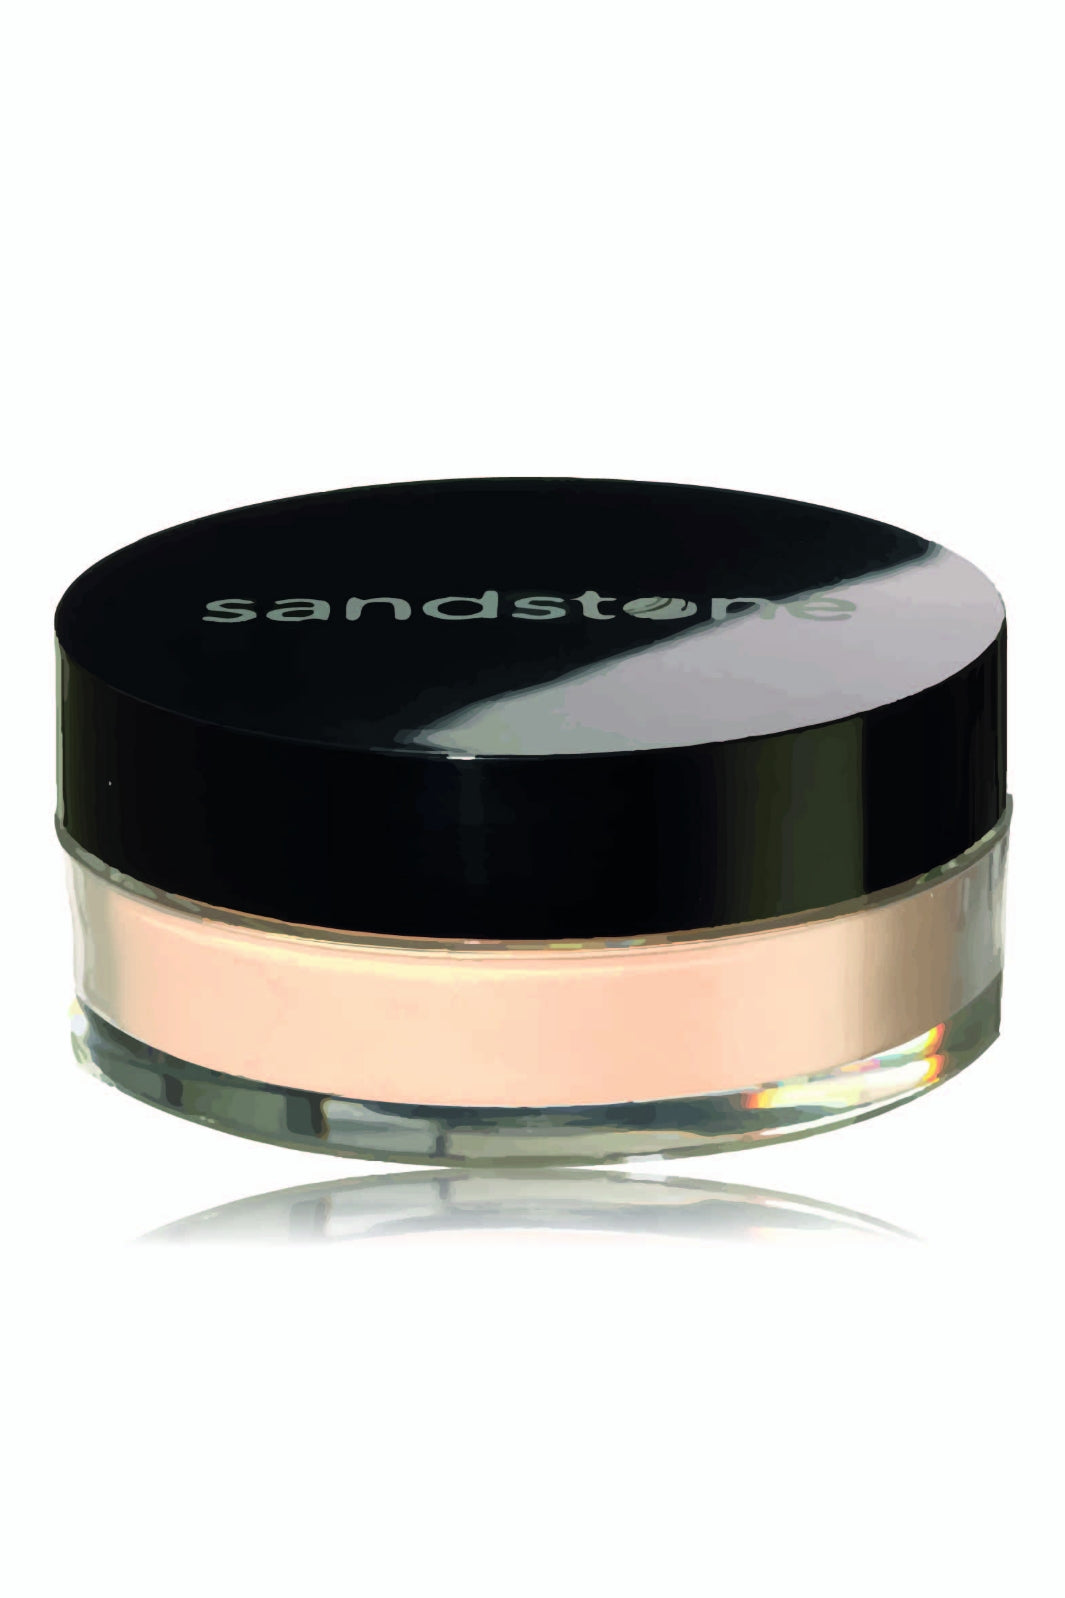 Sandstone - Velvet Skin Mineral Powder - 01 Vanilla Makeup 